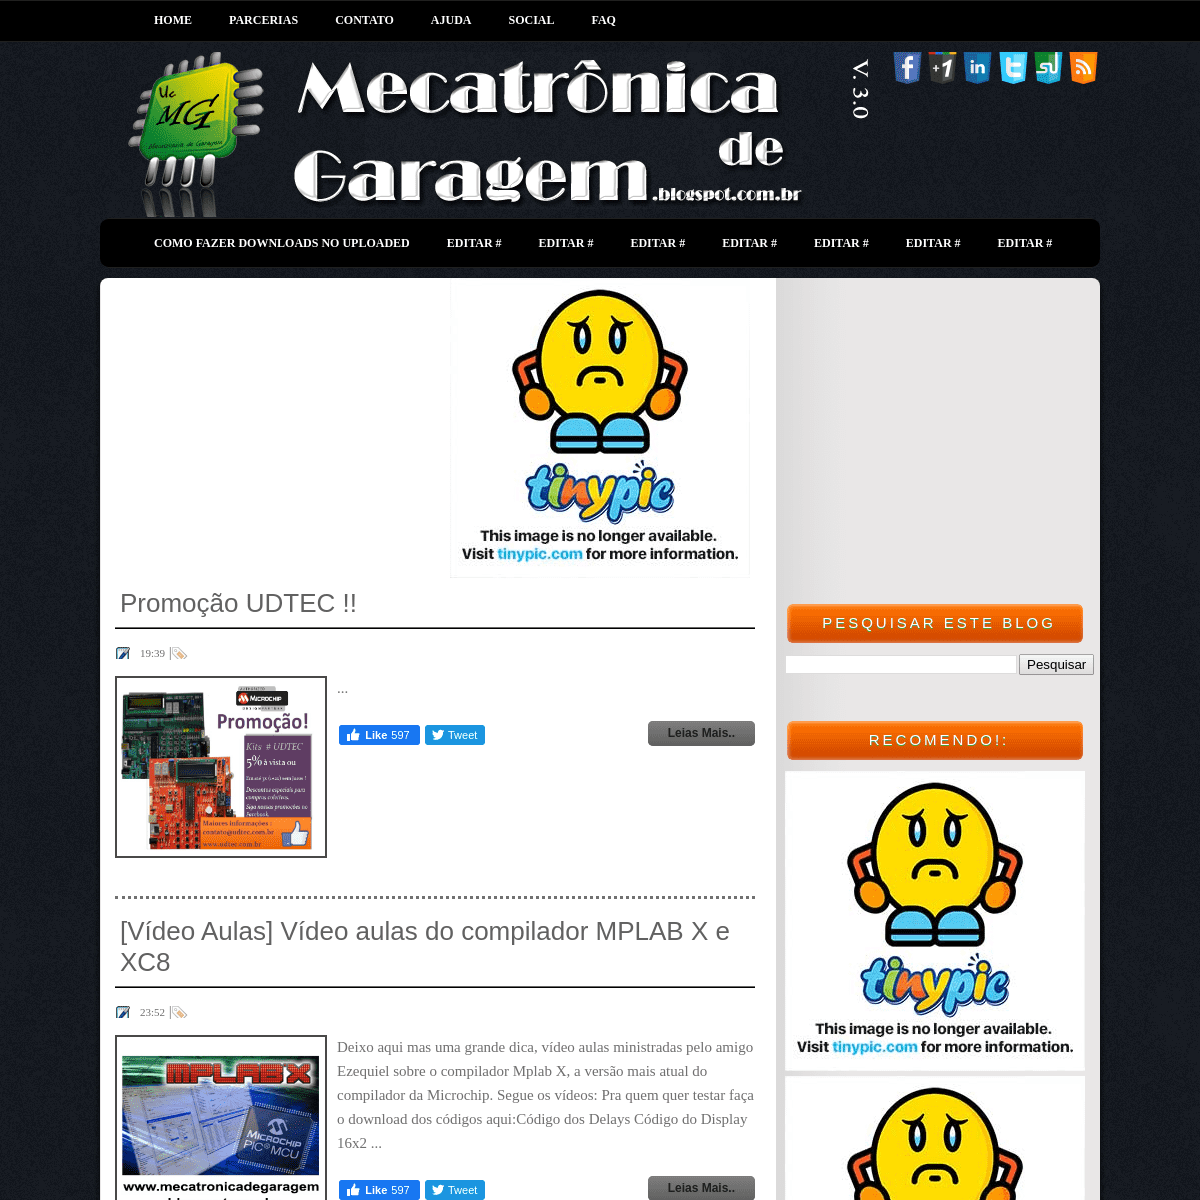 A complete backup of mecatronicadegaragem.blogspot.com